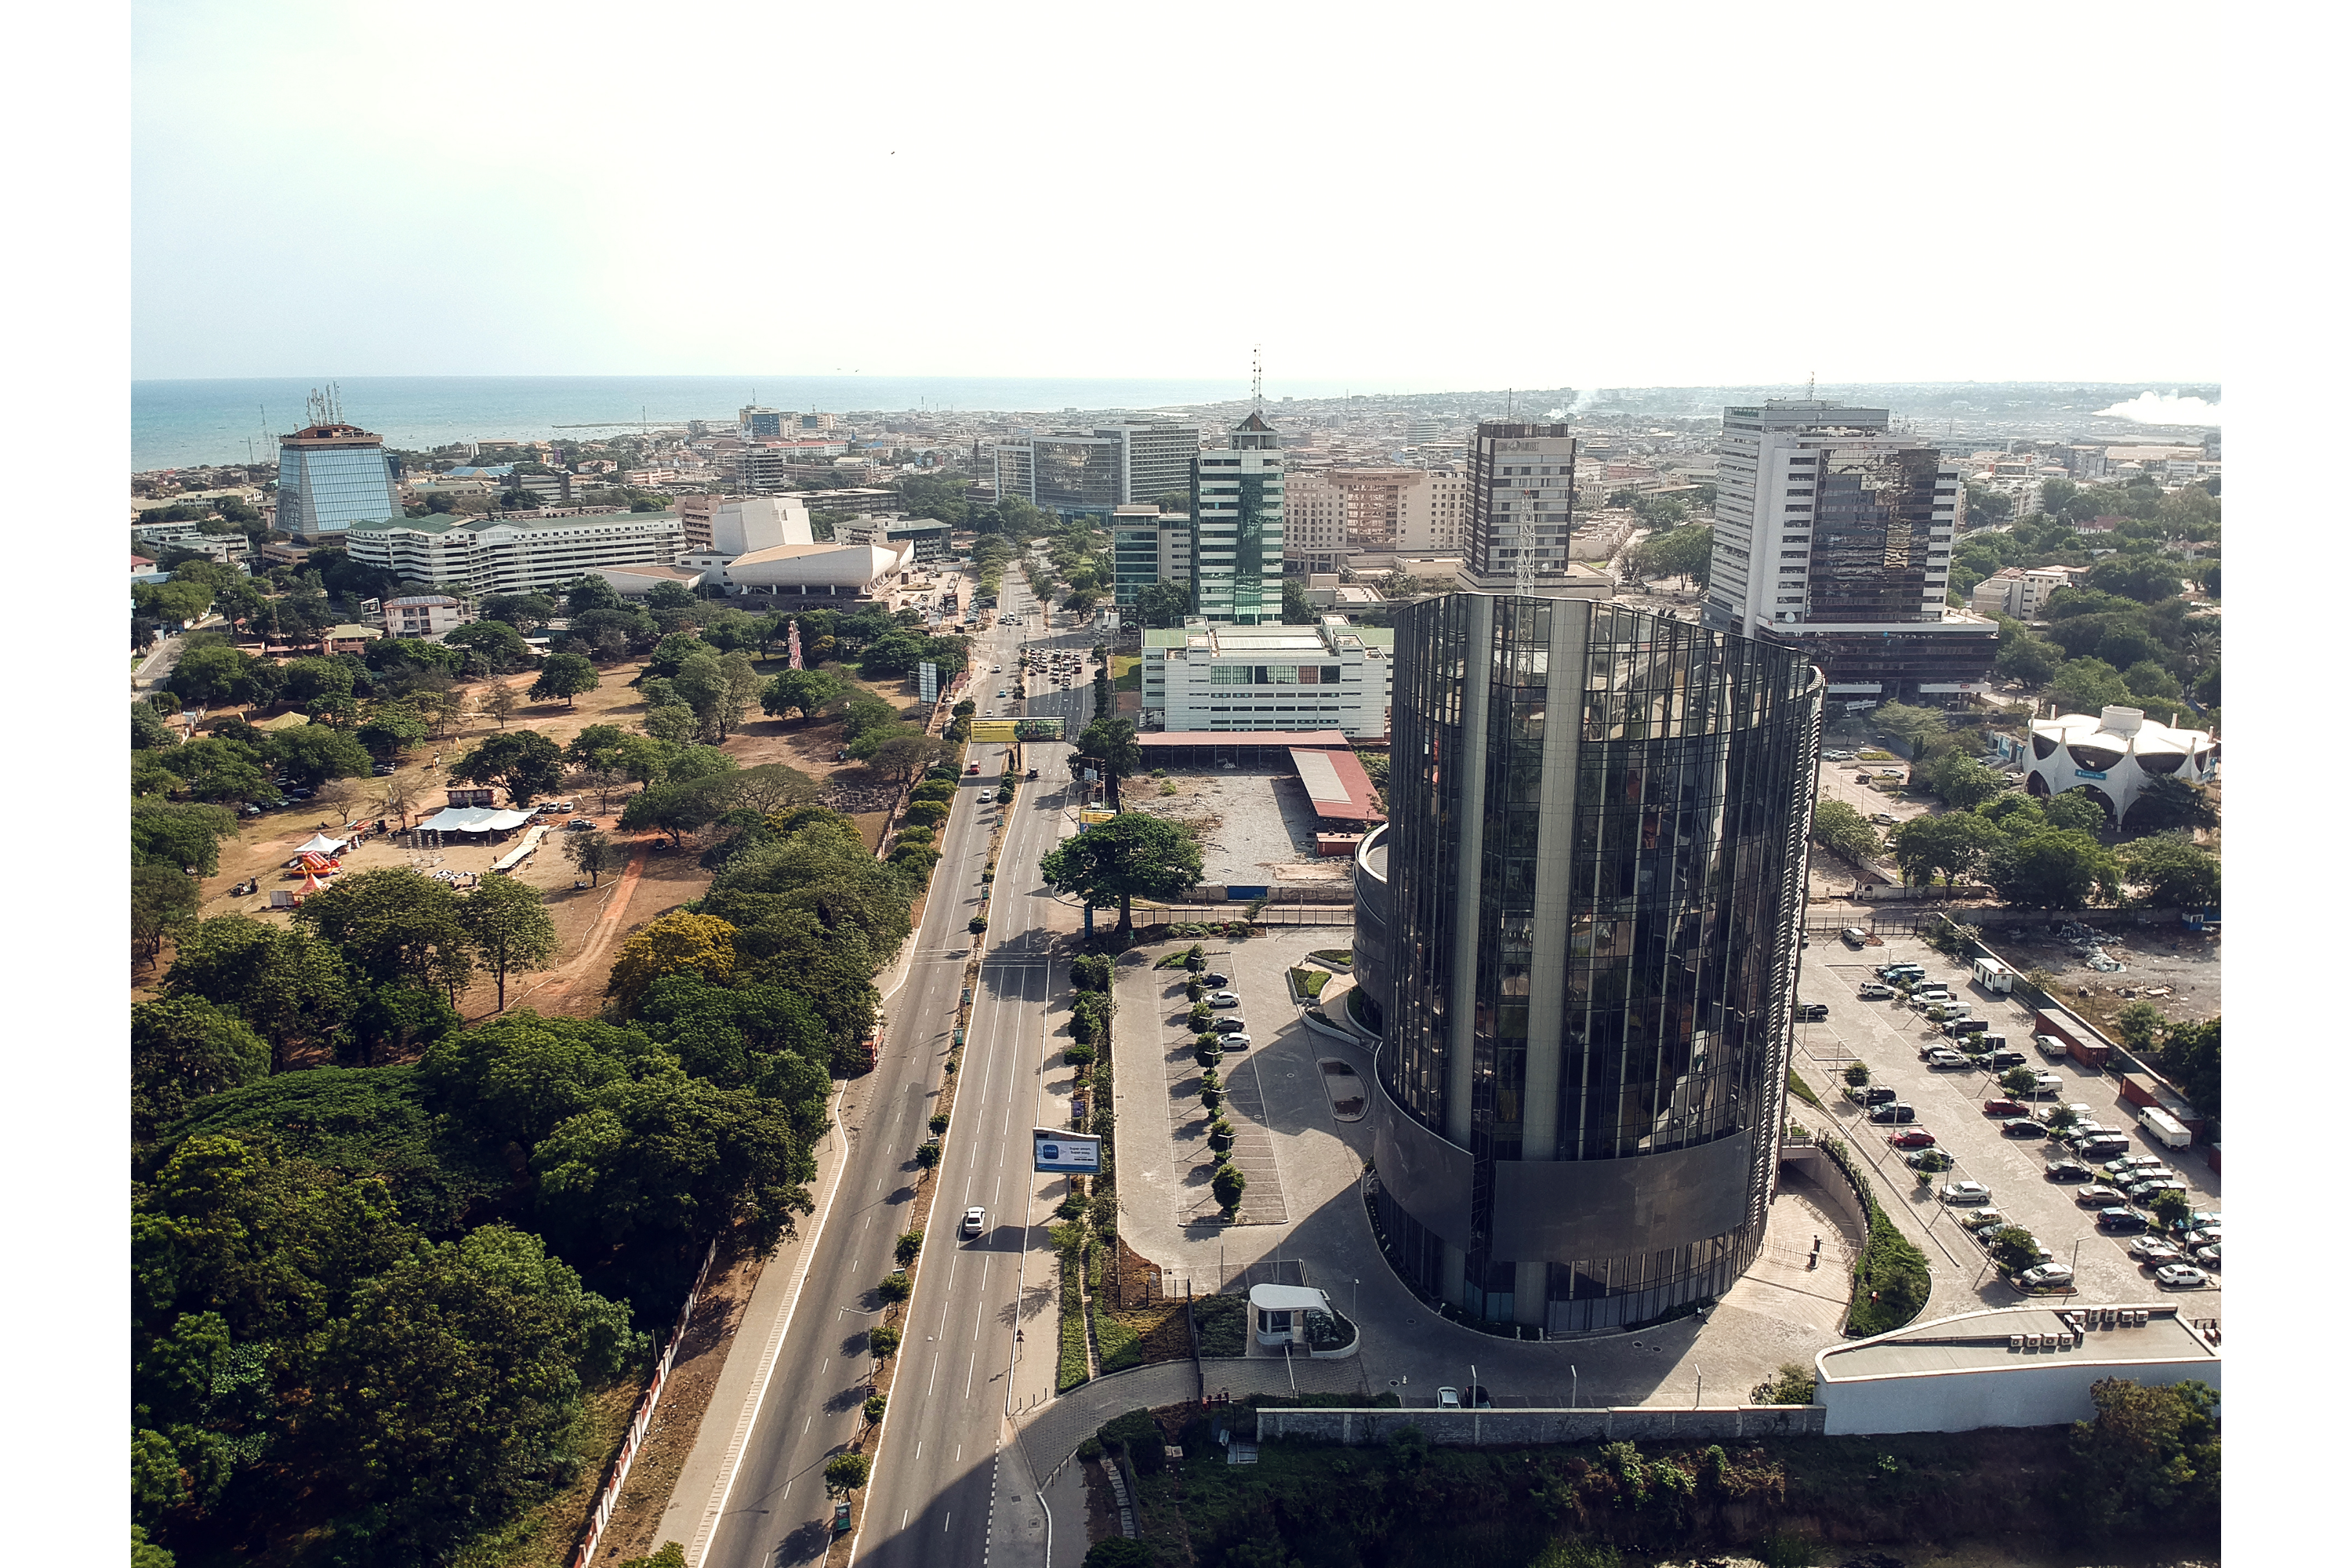 Day 1: Accra, Ghana